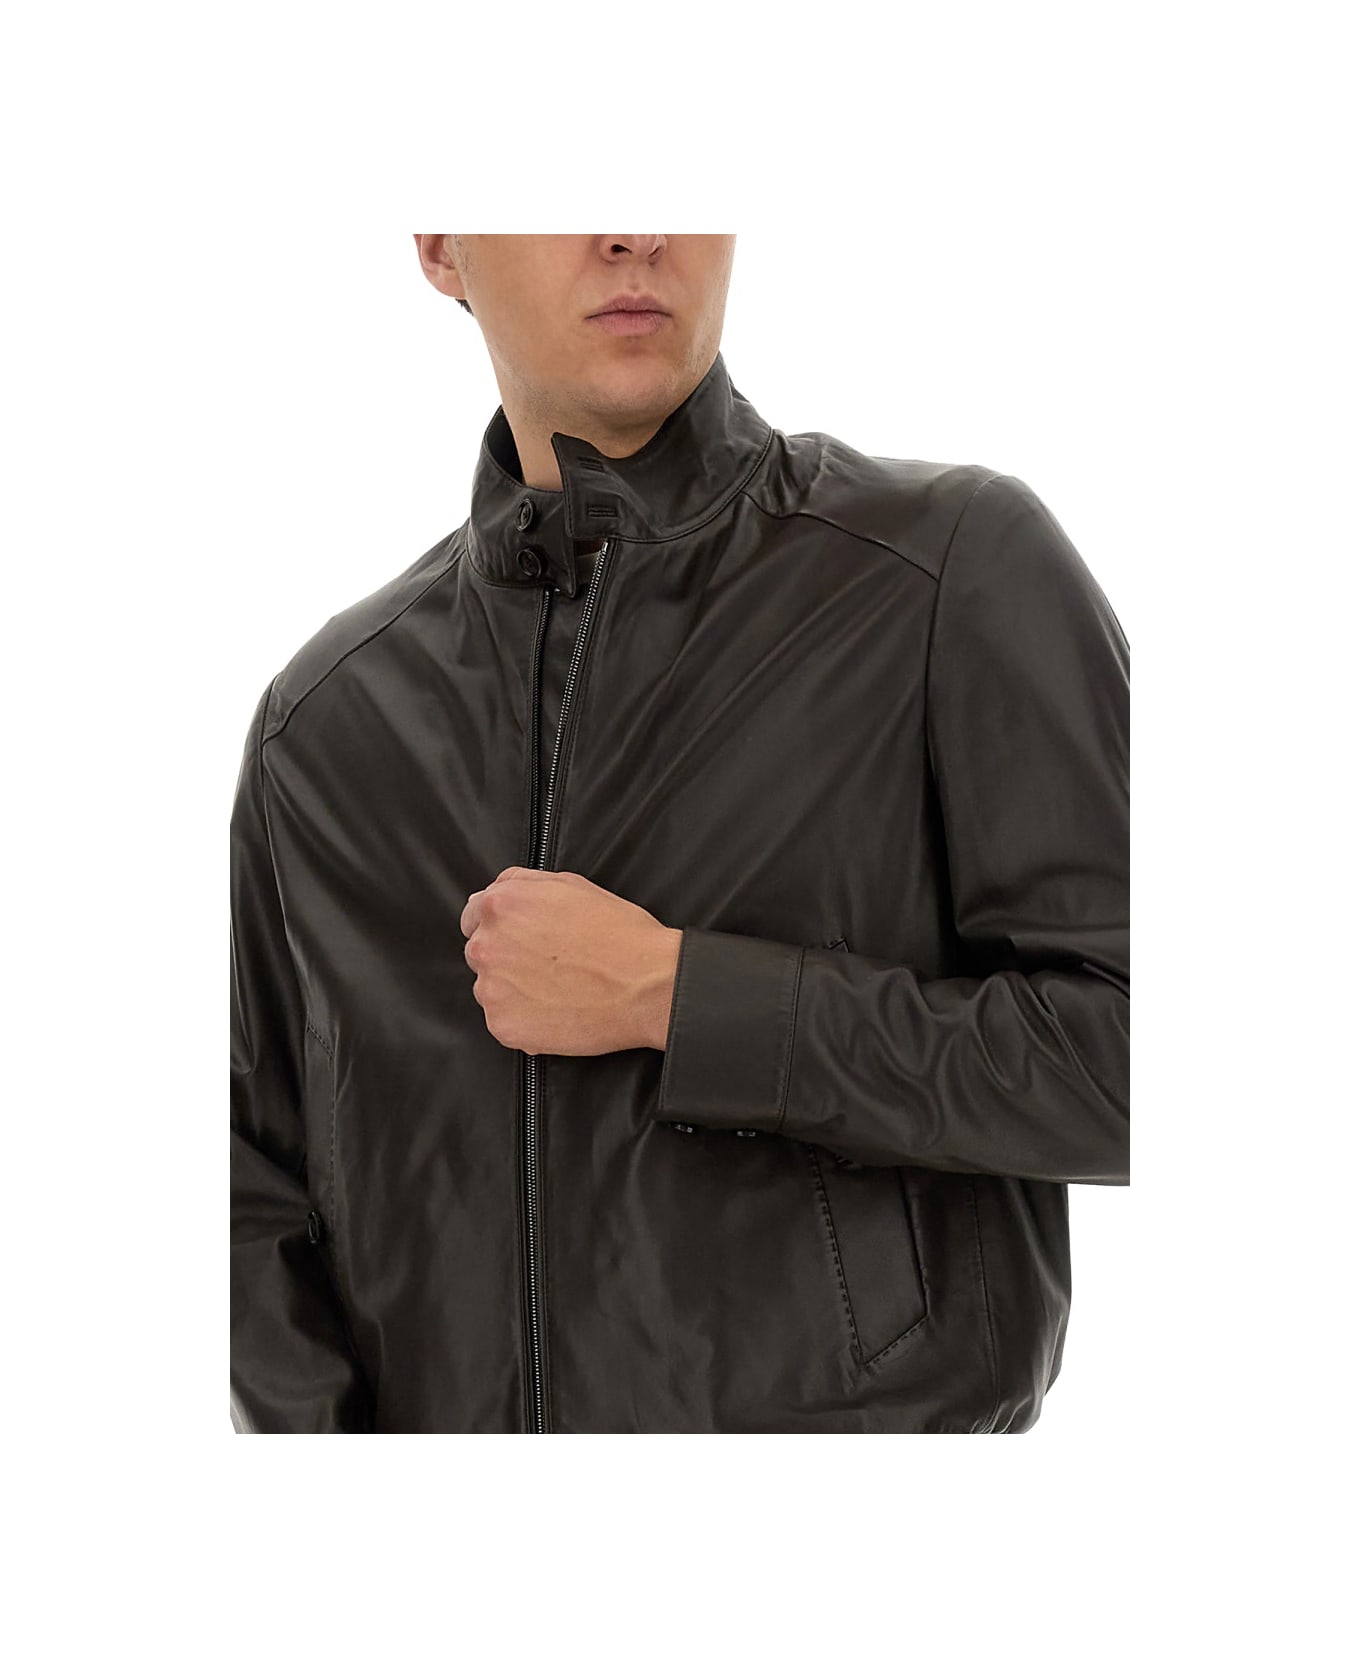 Hugo Boss Leather Jacket - BROWN